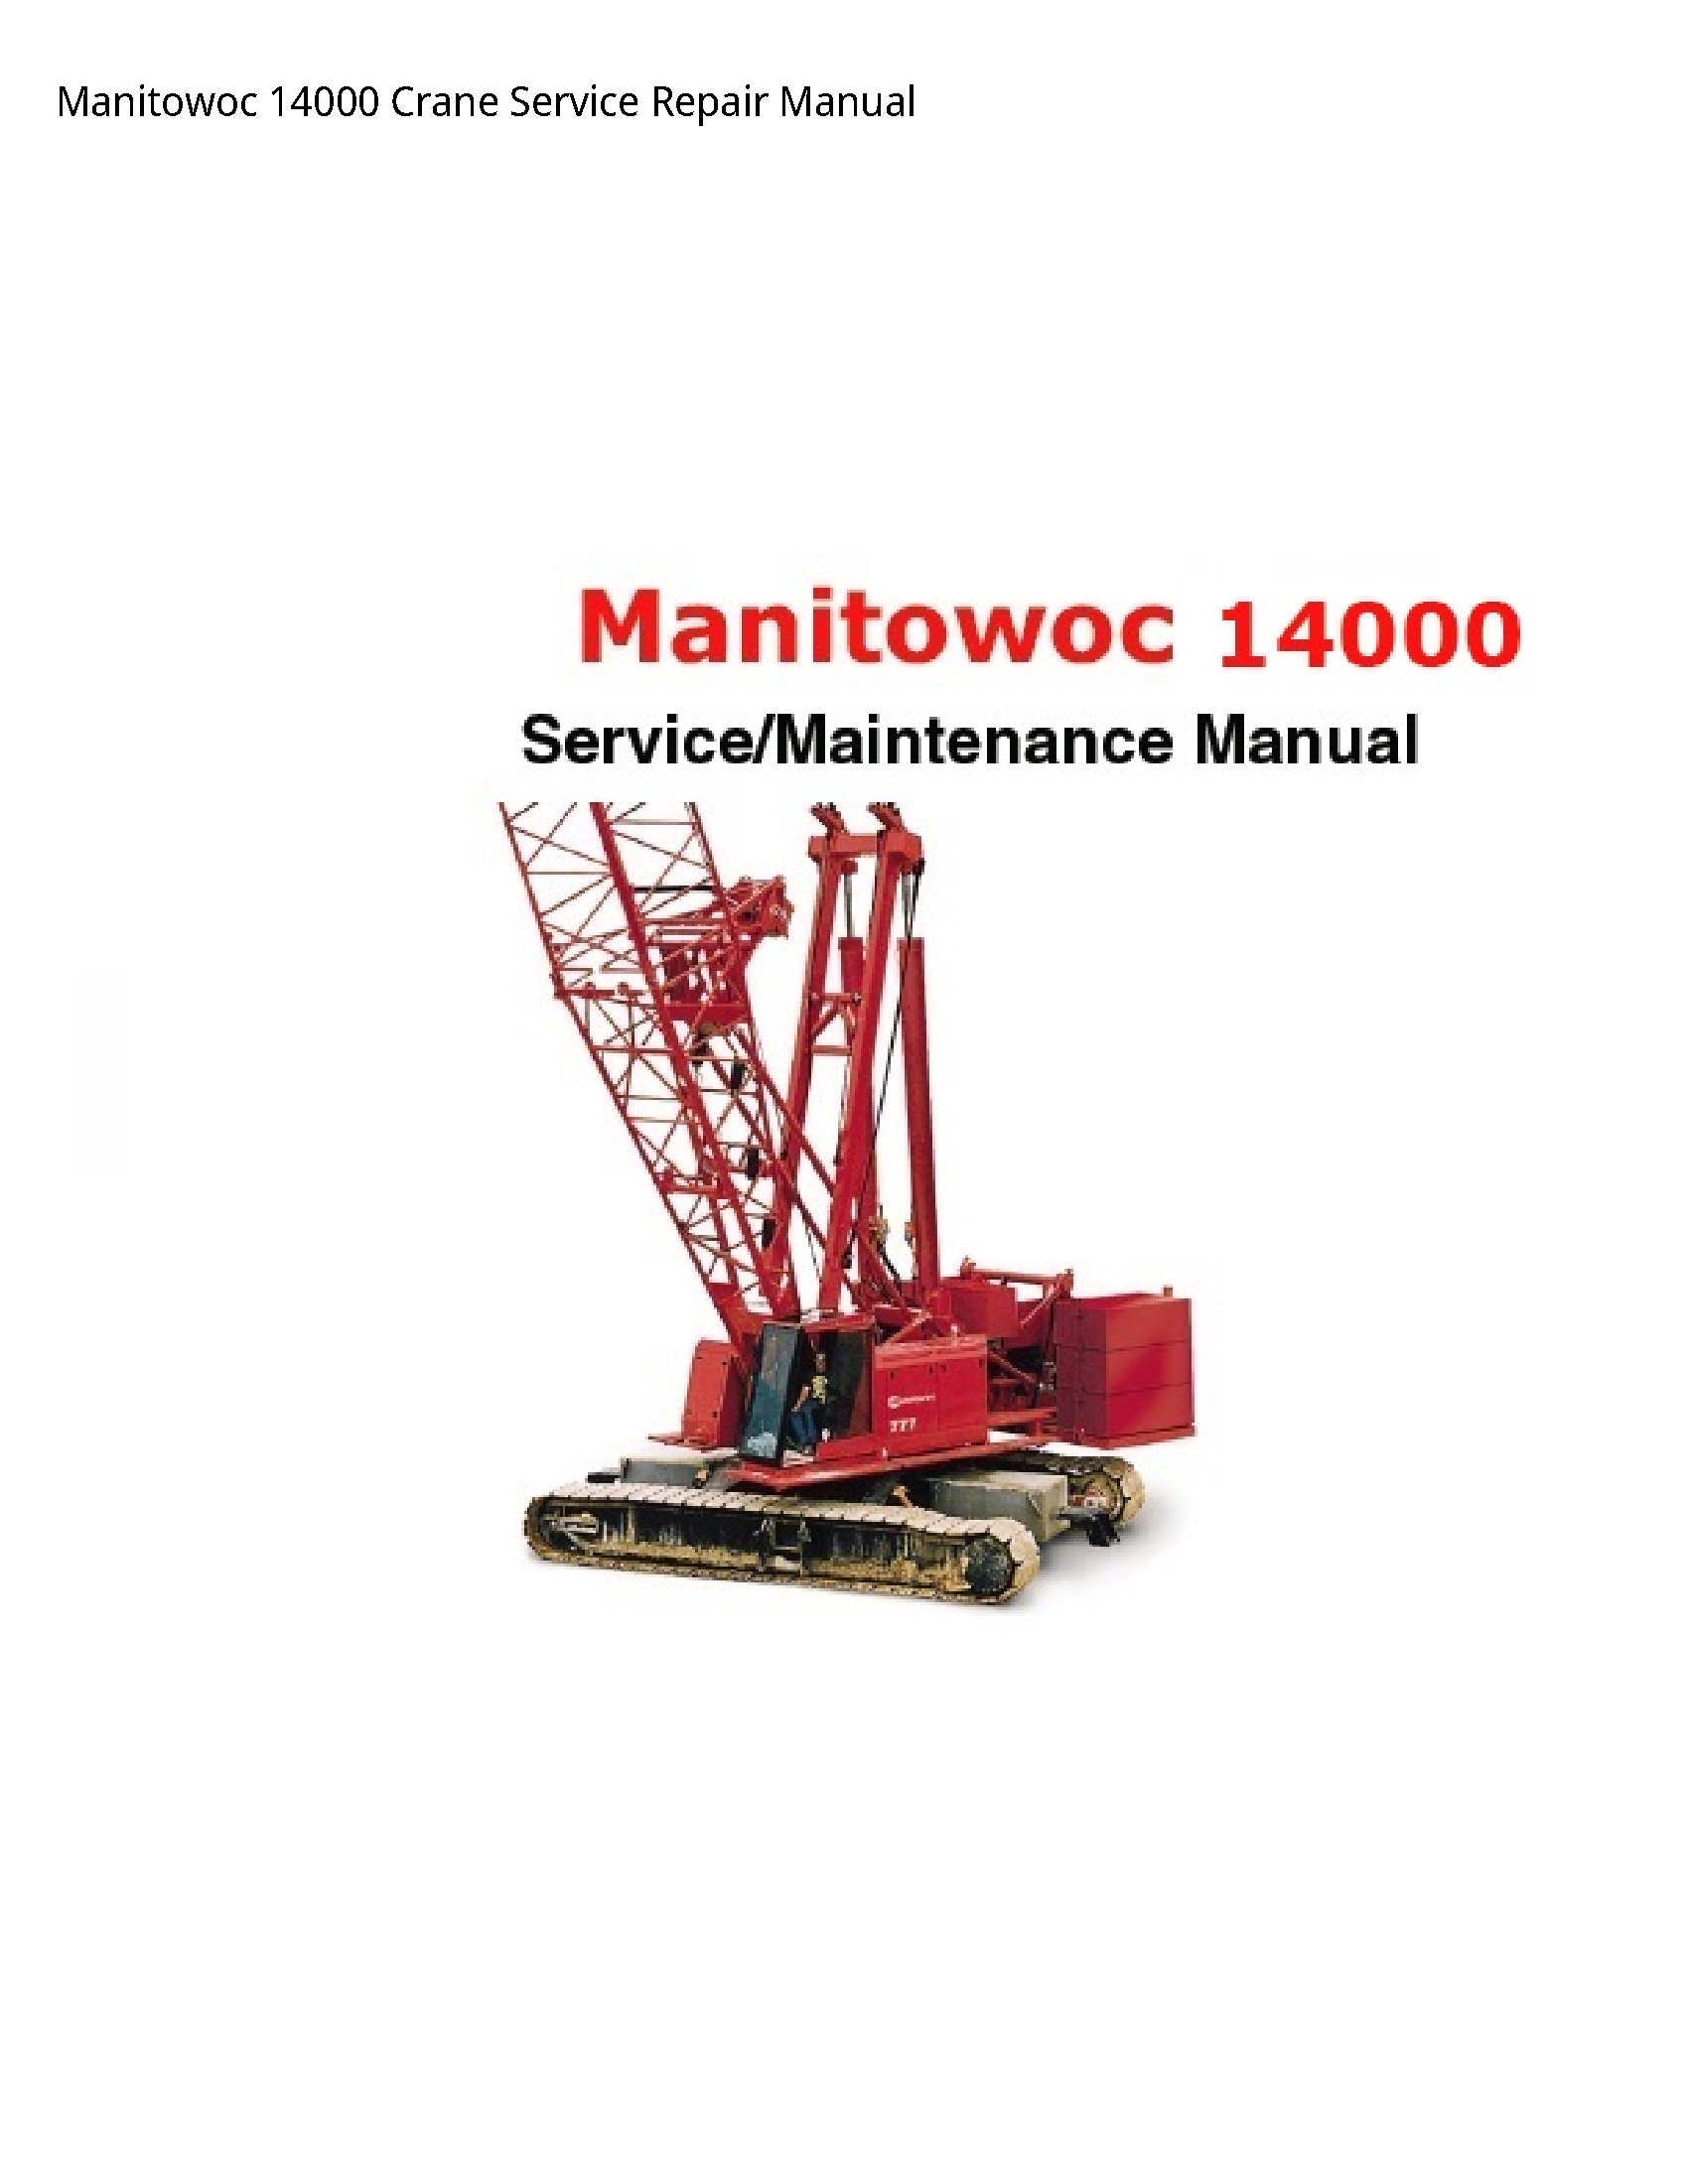 Manitowoc 14000 Crane manual